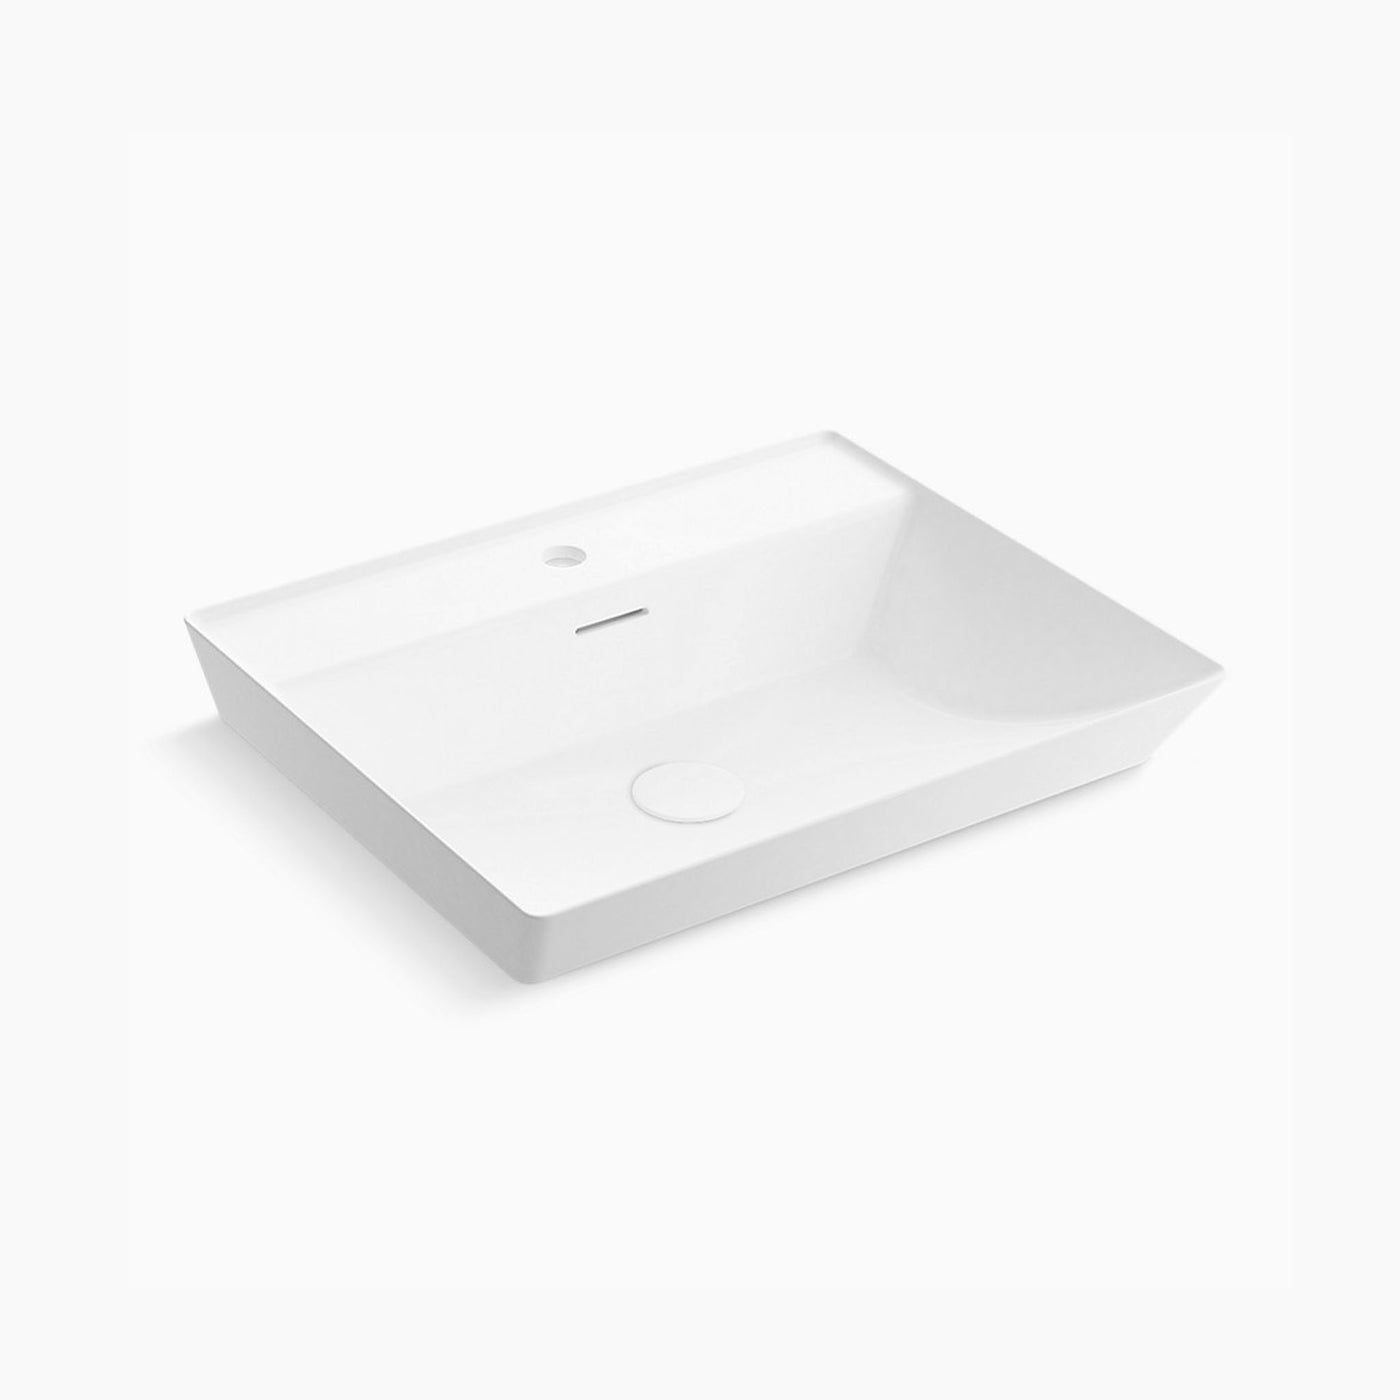 23" Brazn™ rectangular semi-recessed vessel bathroom sink